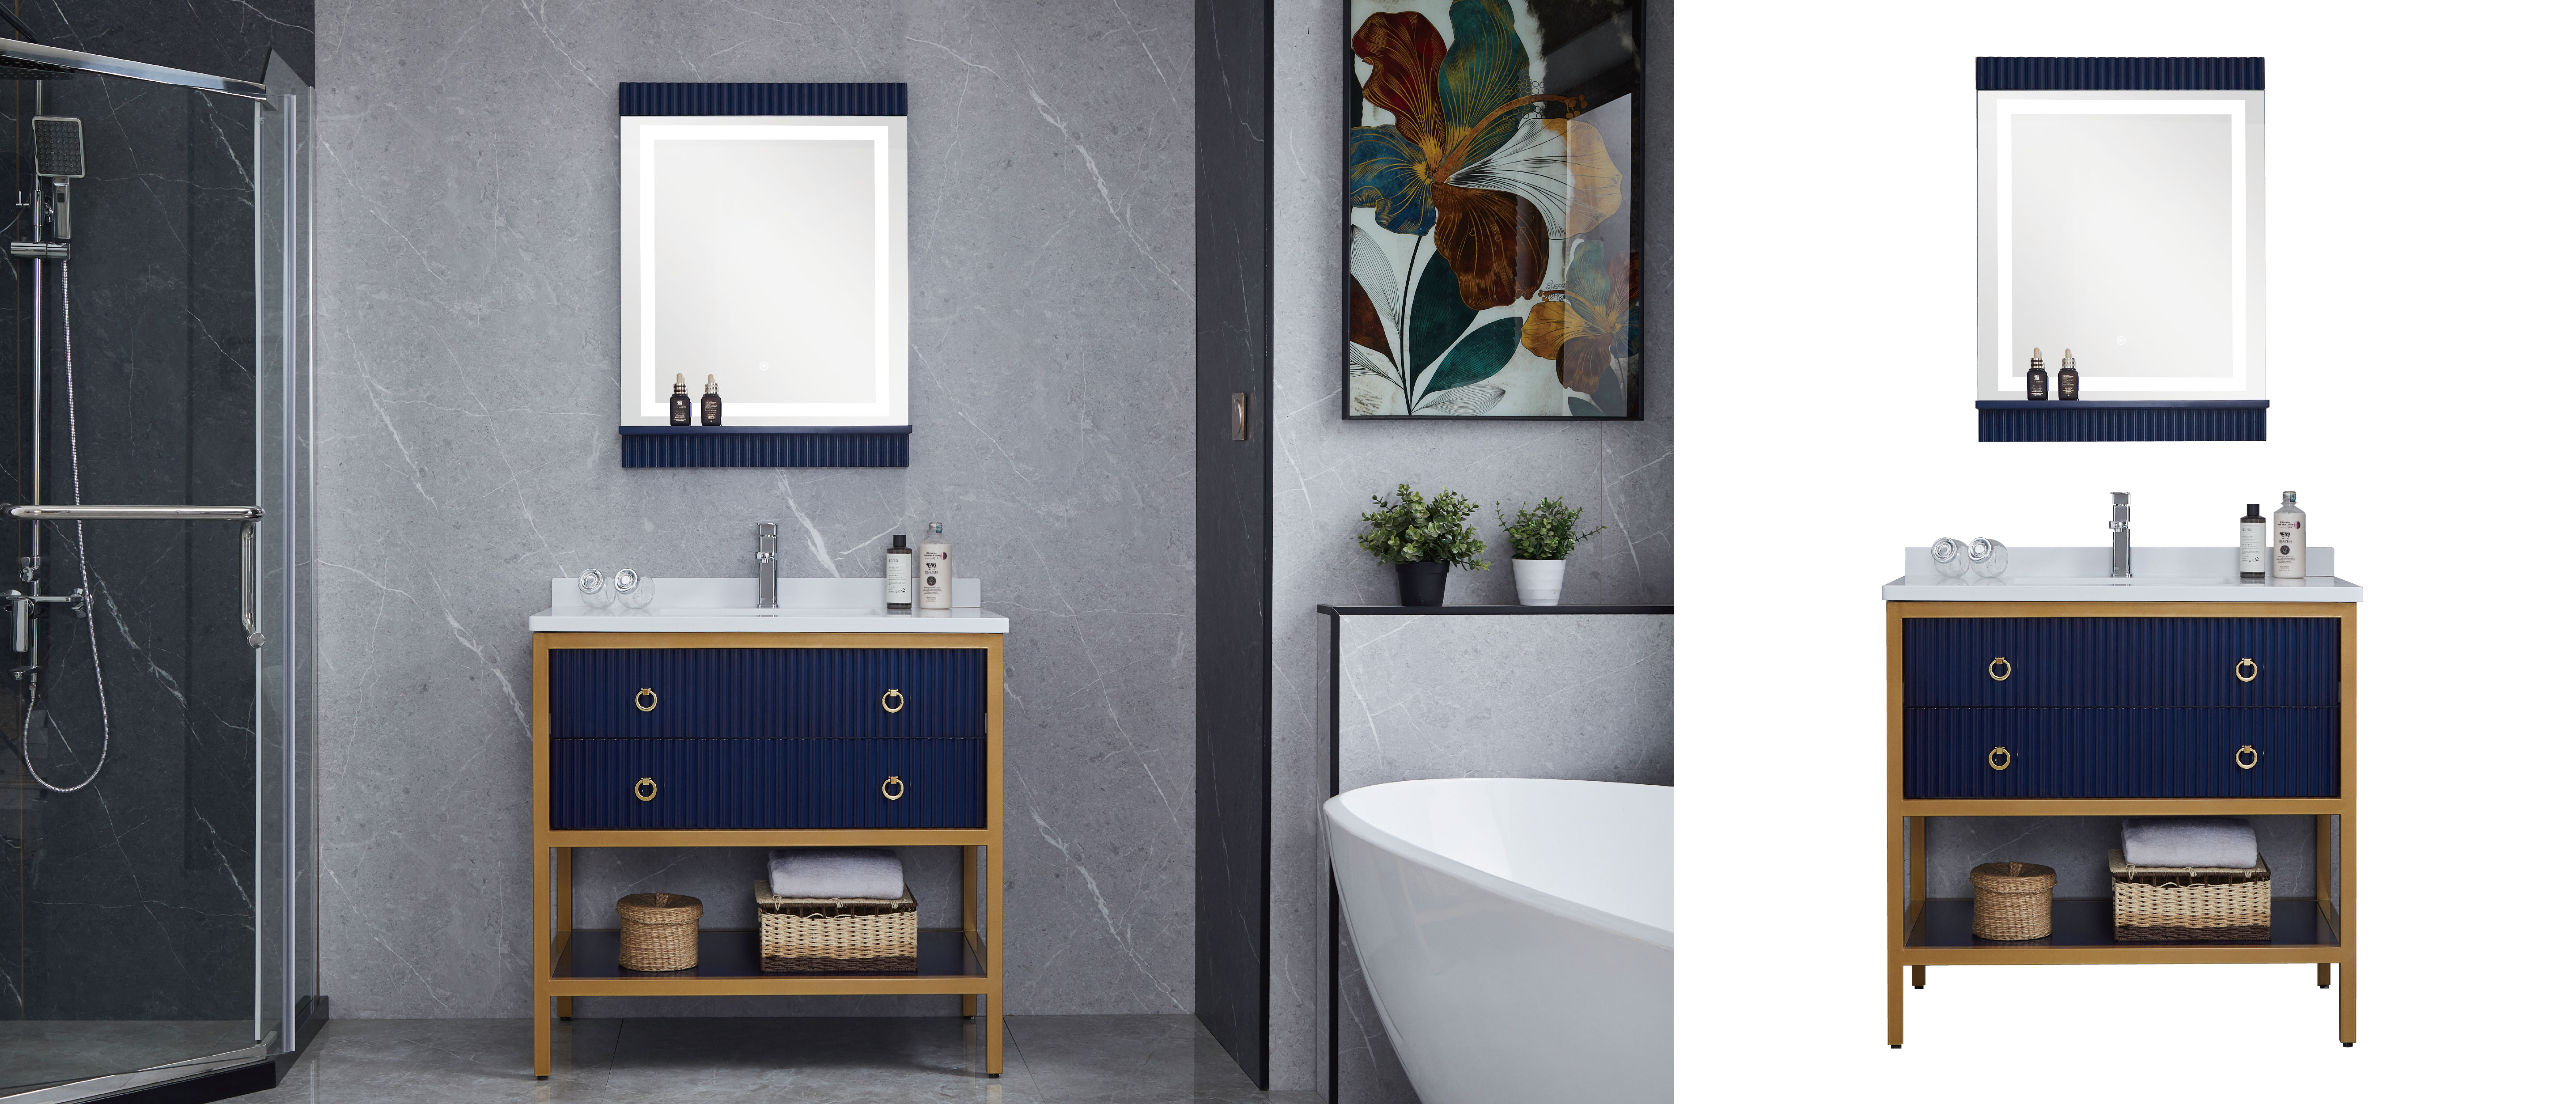 Navy Blue Bathroom Vanity Cabinets